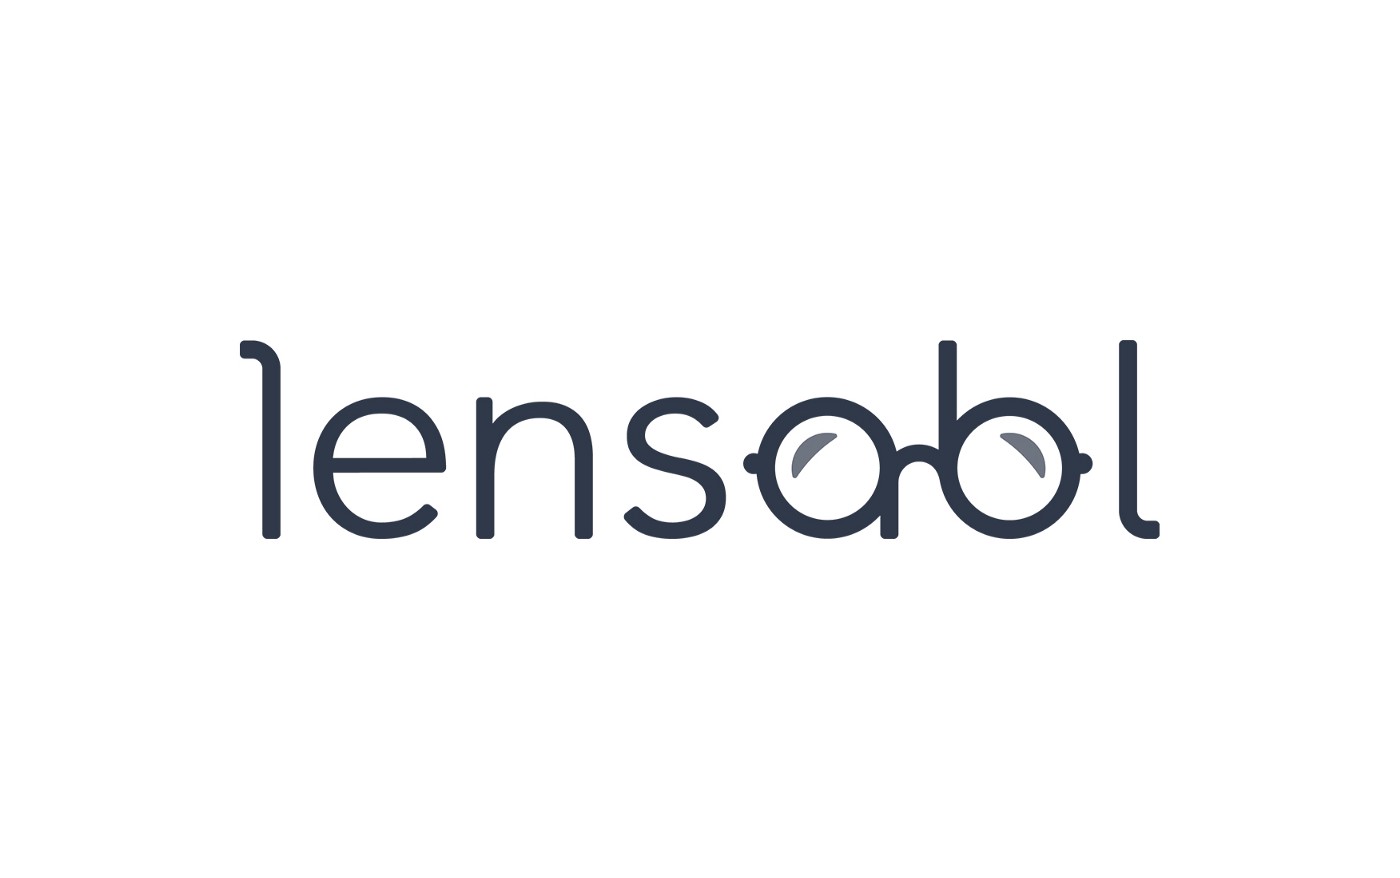 Text based logo that says Lensabl